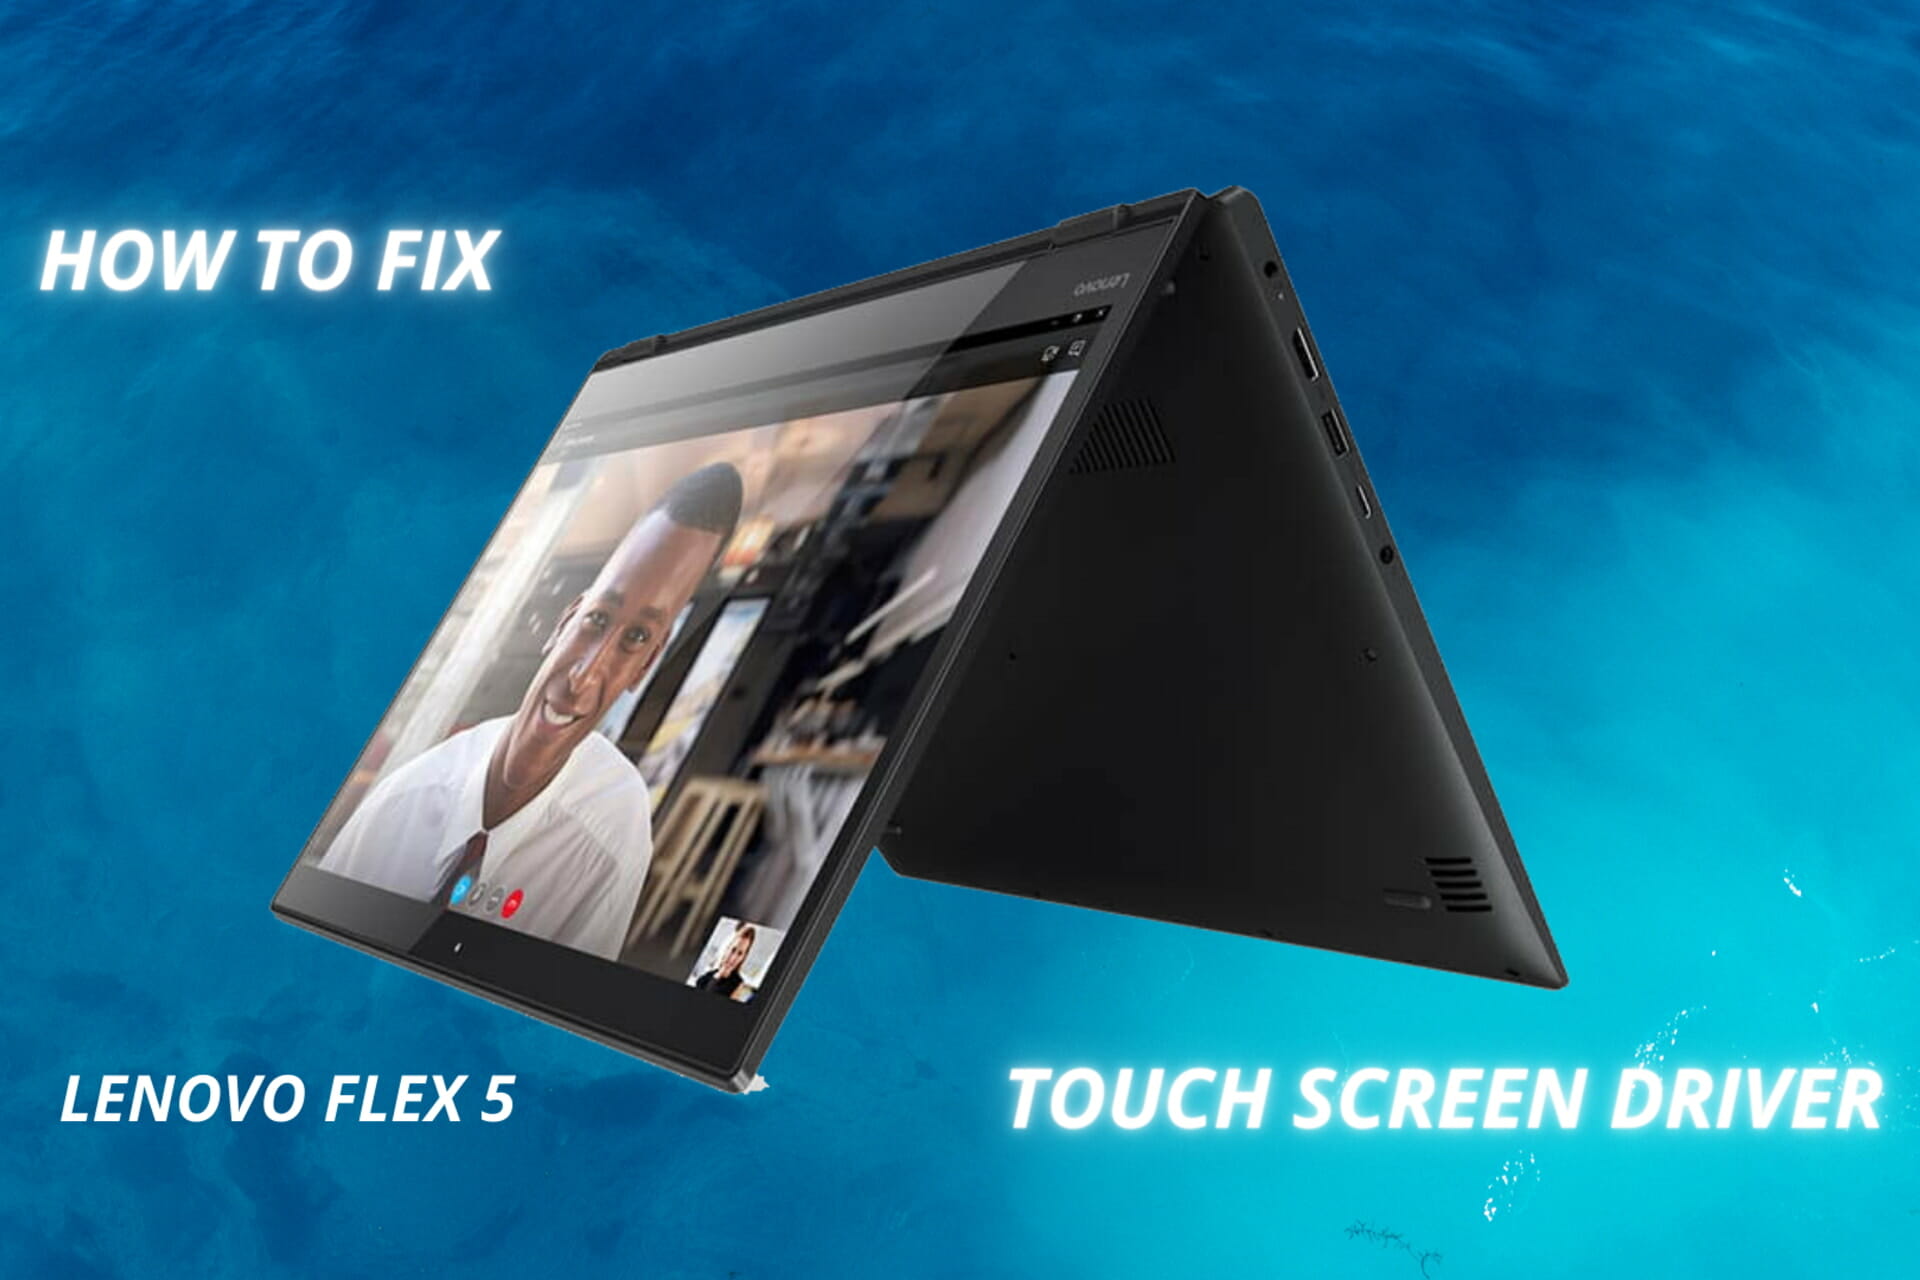 FIX: Lenovo Flex 5 touch screen driver not working